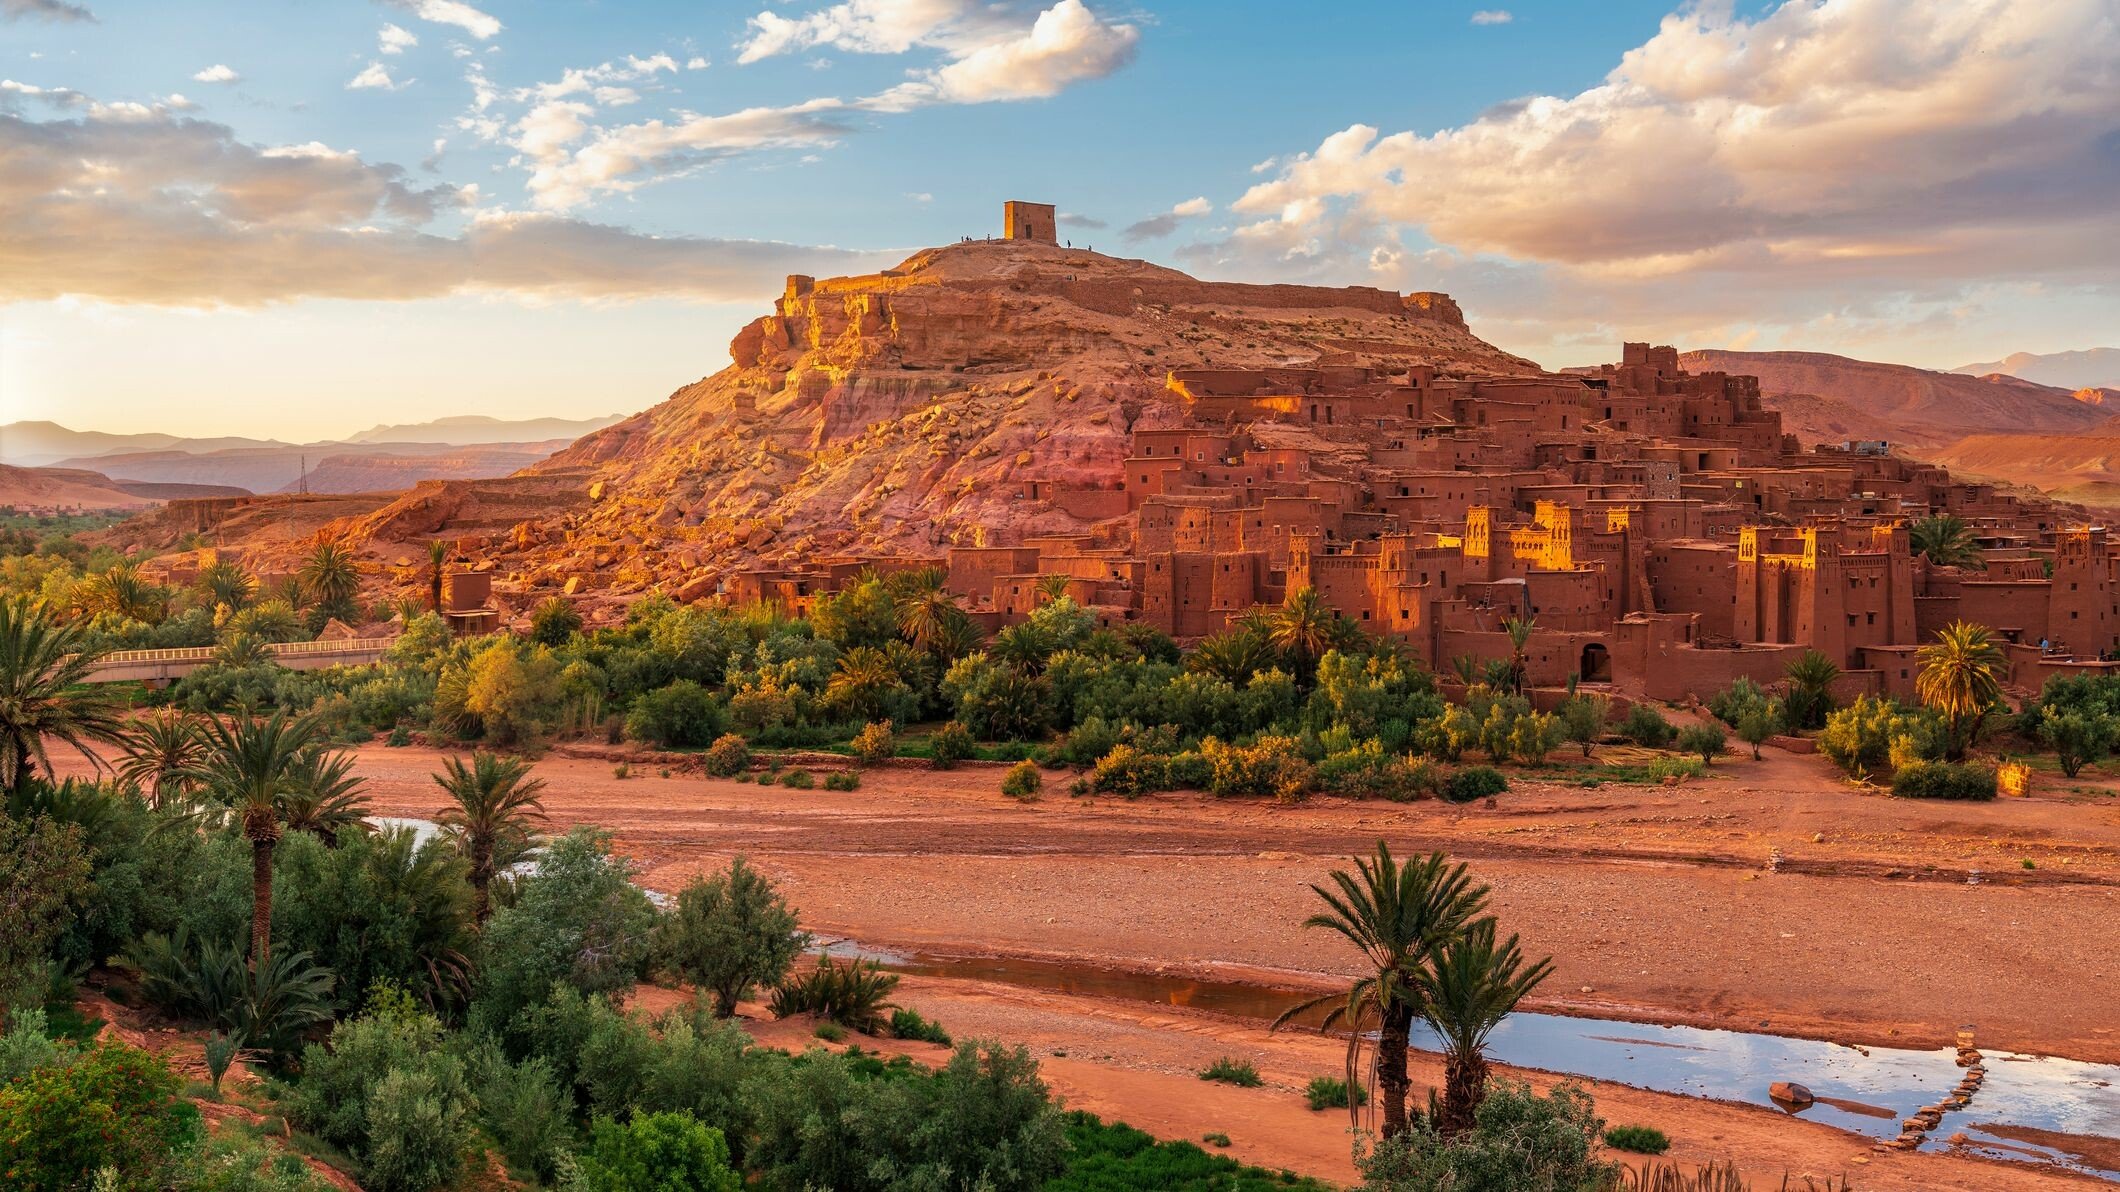 Ouarzazate Ait Ben Haddou excursion from Marrakech